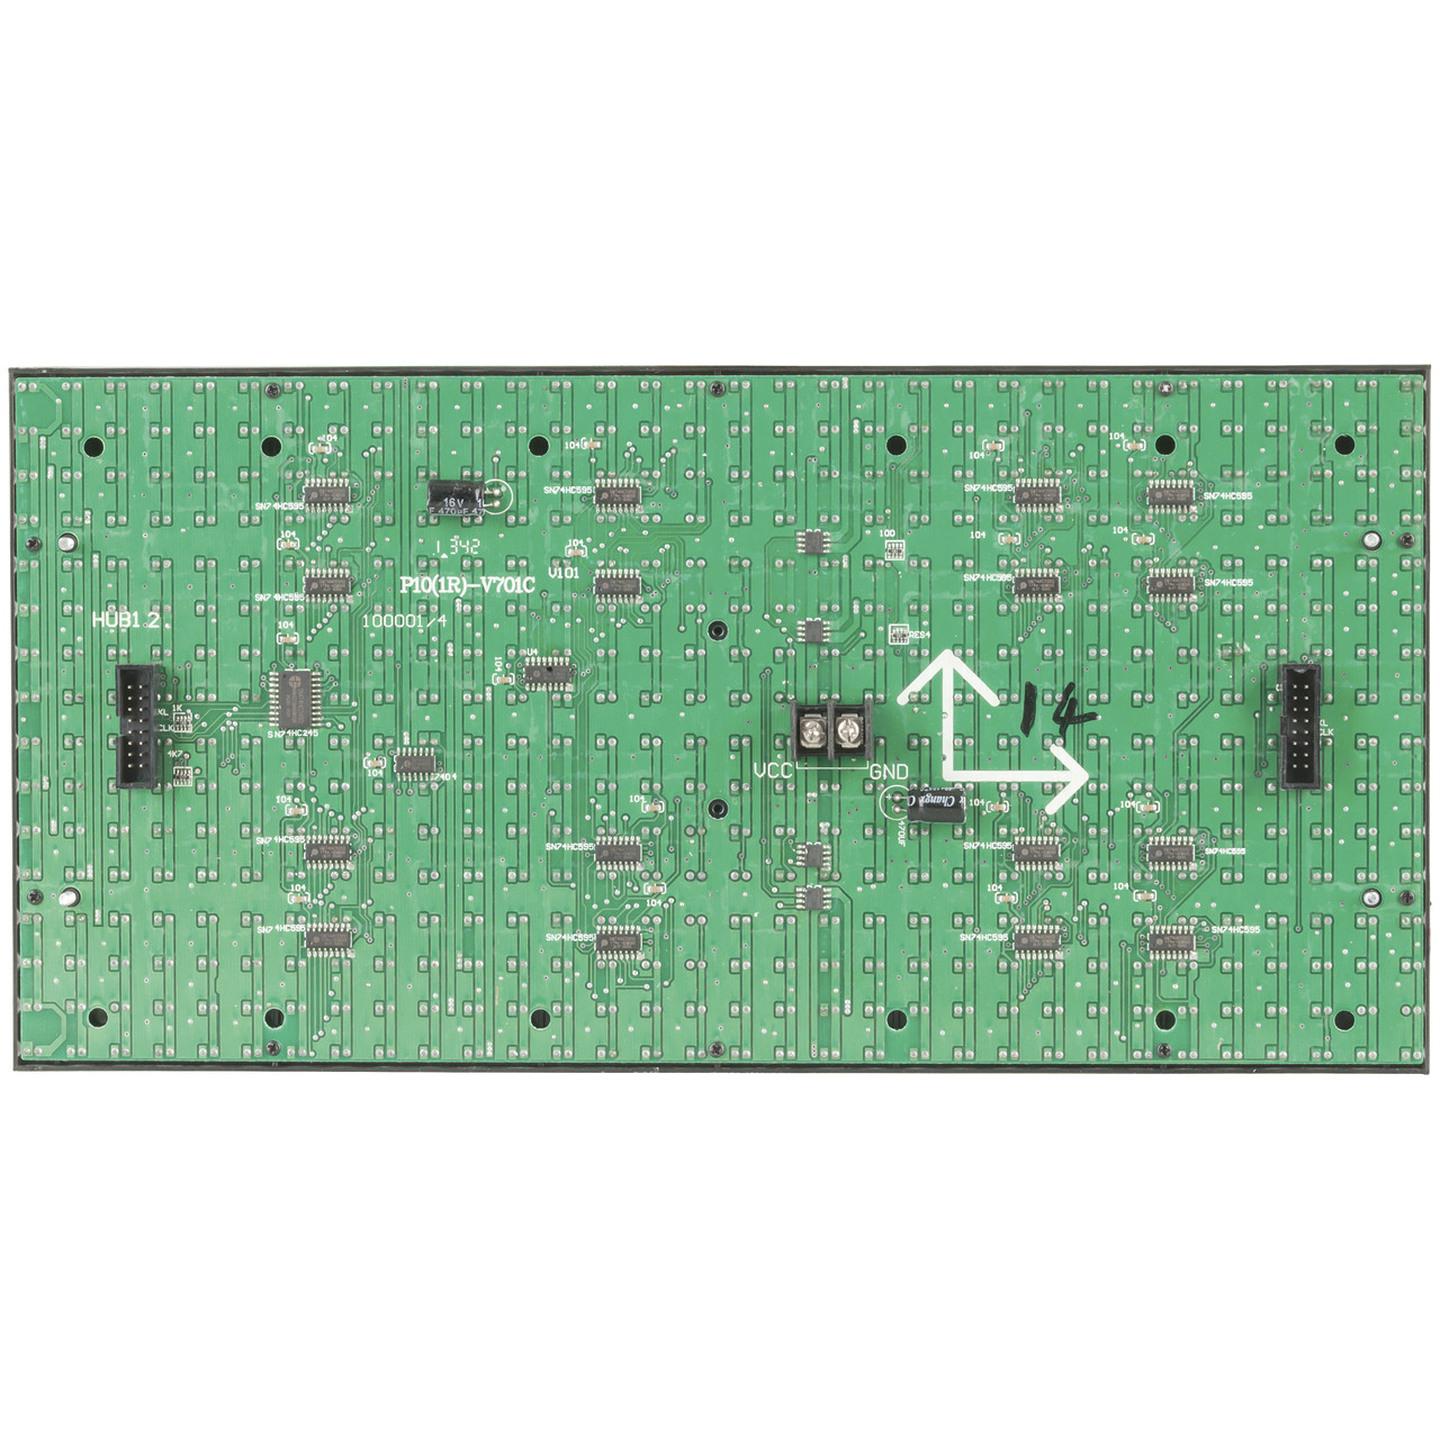 White LED Dot Matrix Display for Arduino